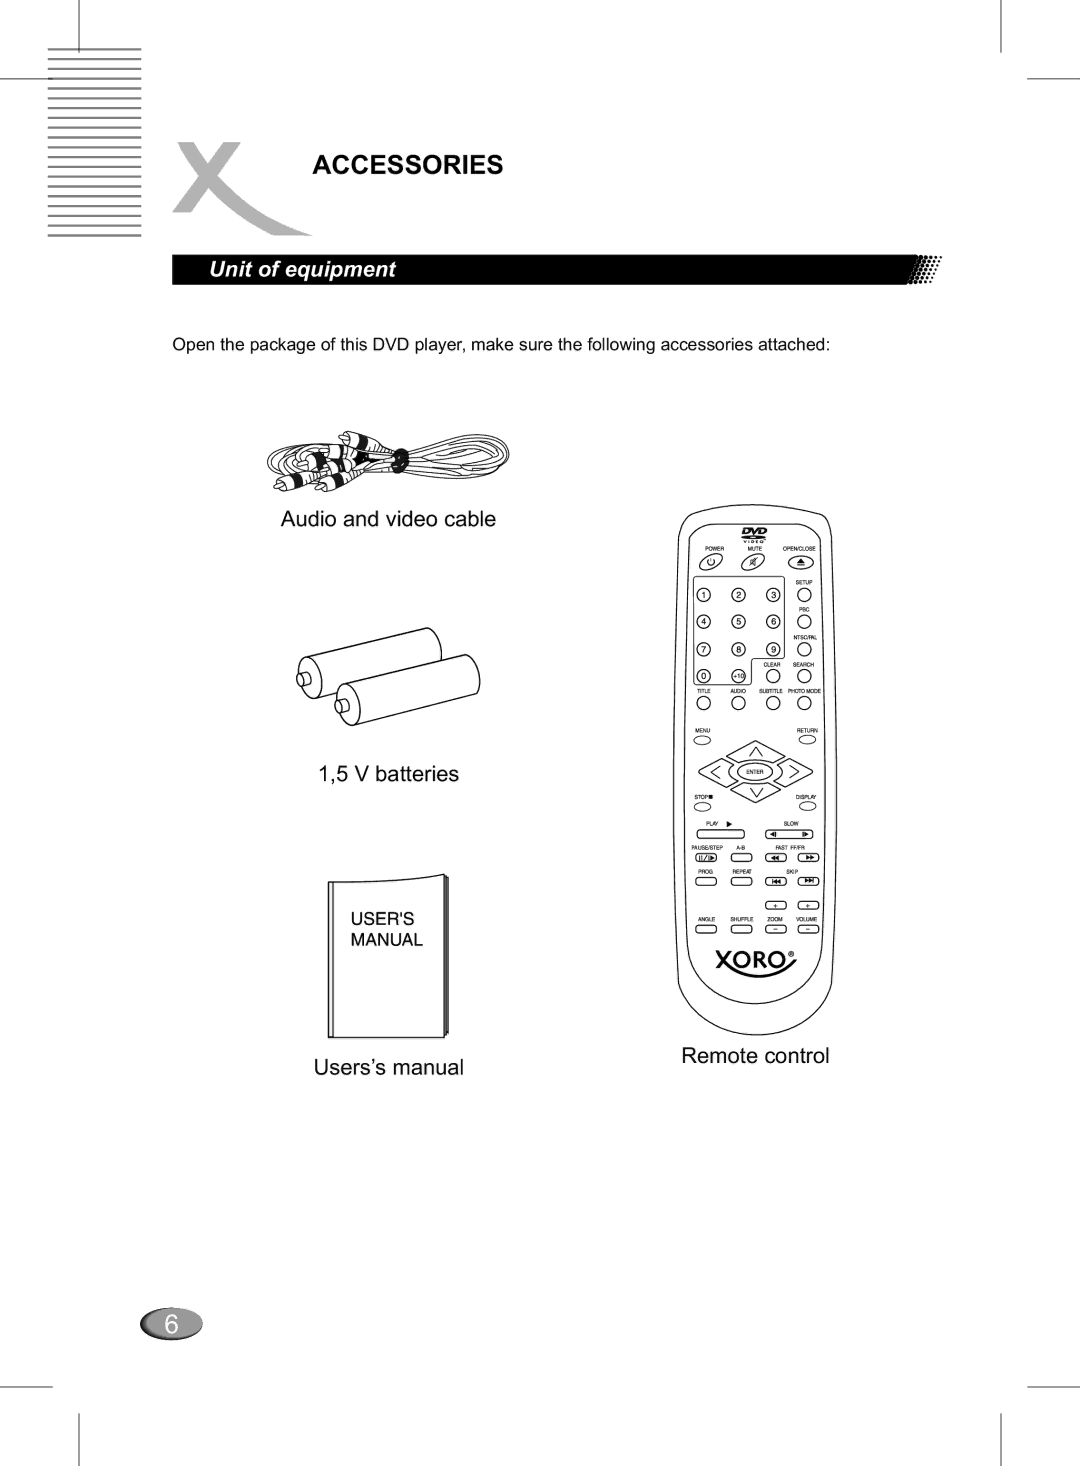 Xoro MPEG4 manual Accessories, Unit of equipment 